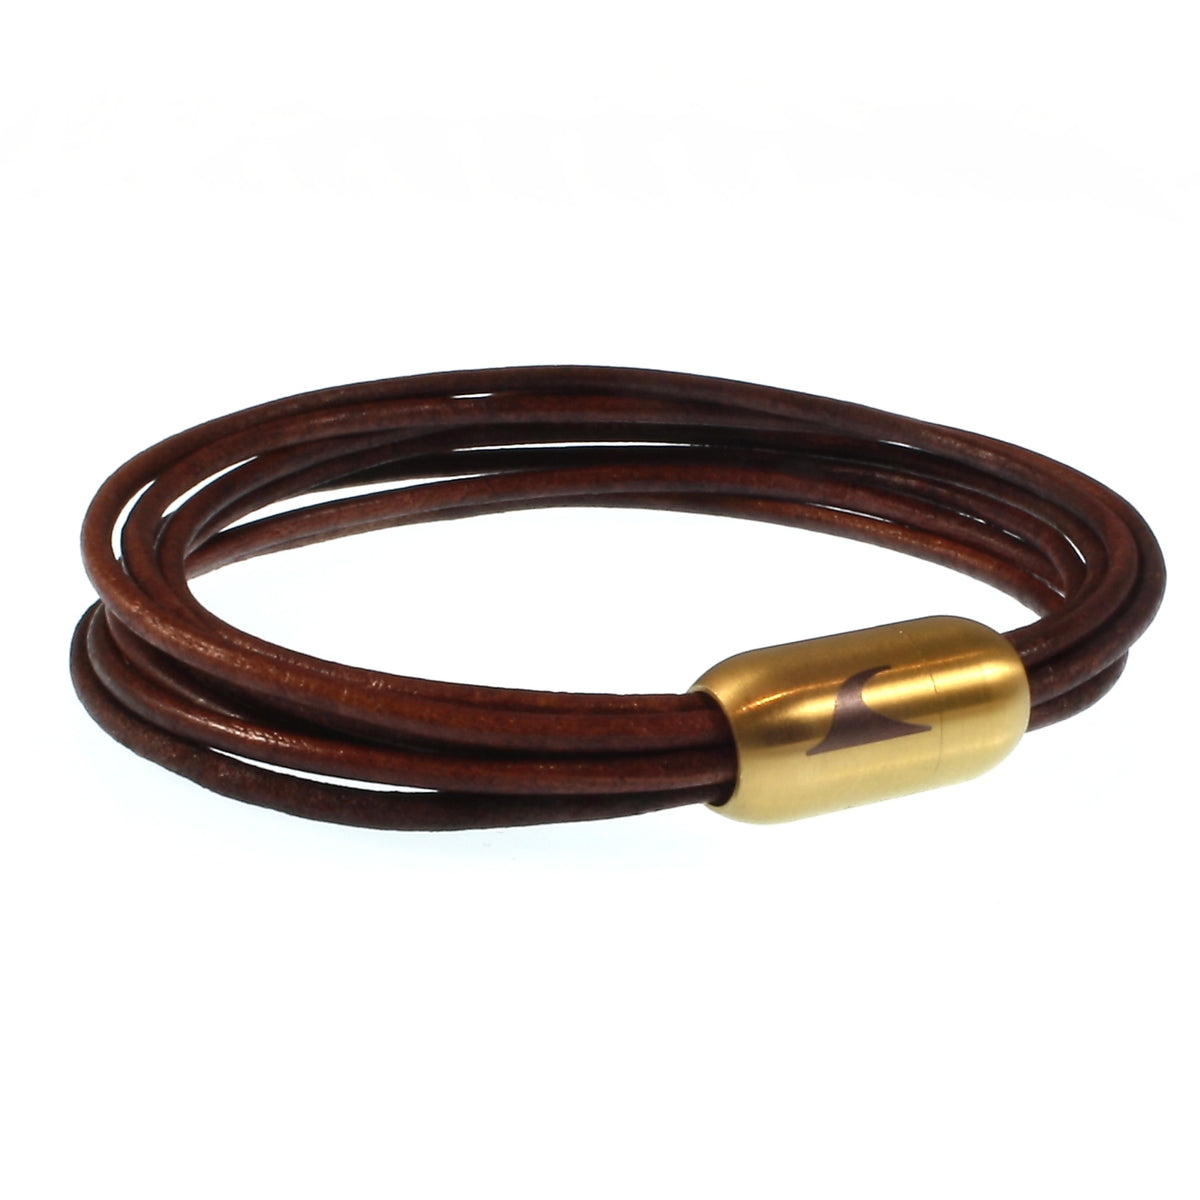 Damen-Leder-armband-fem-bordeaux-gold-Edelstahlverschluss-vorn-wavepirate-shop-r